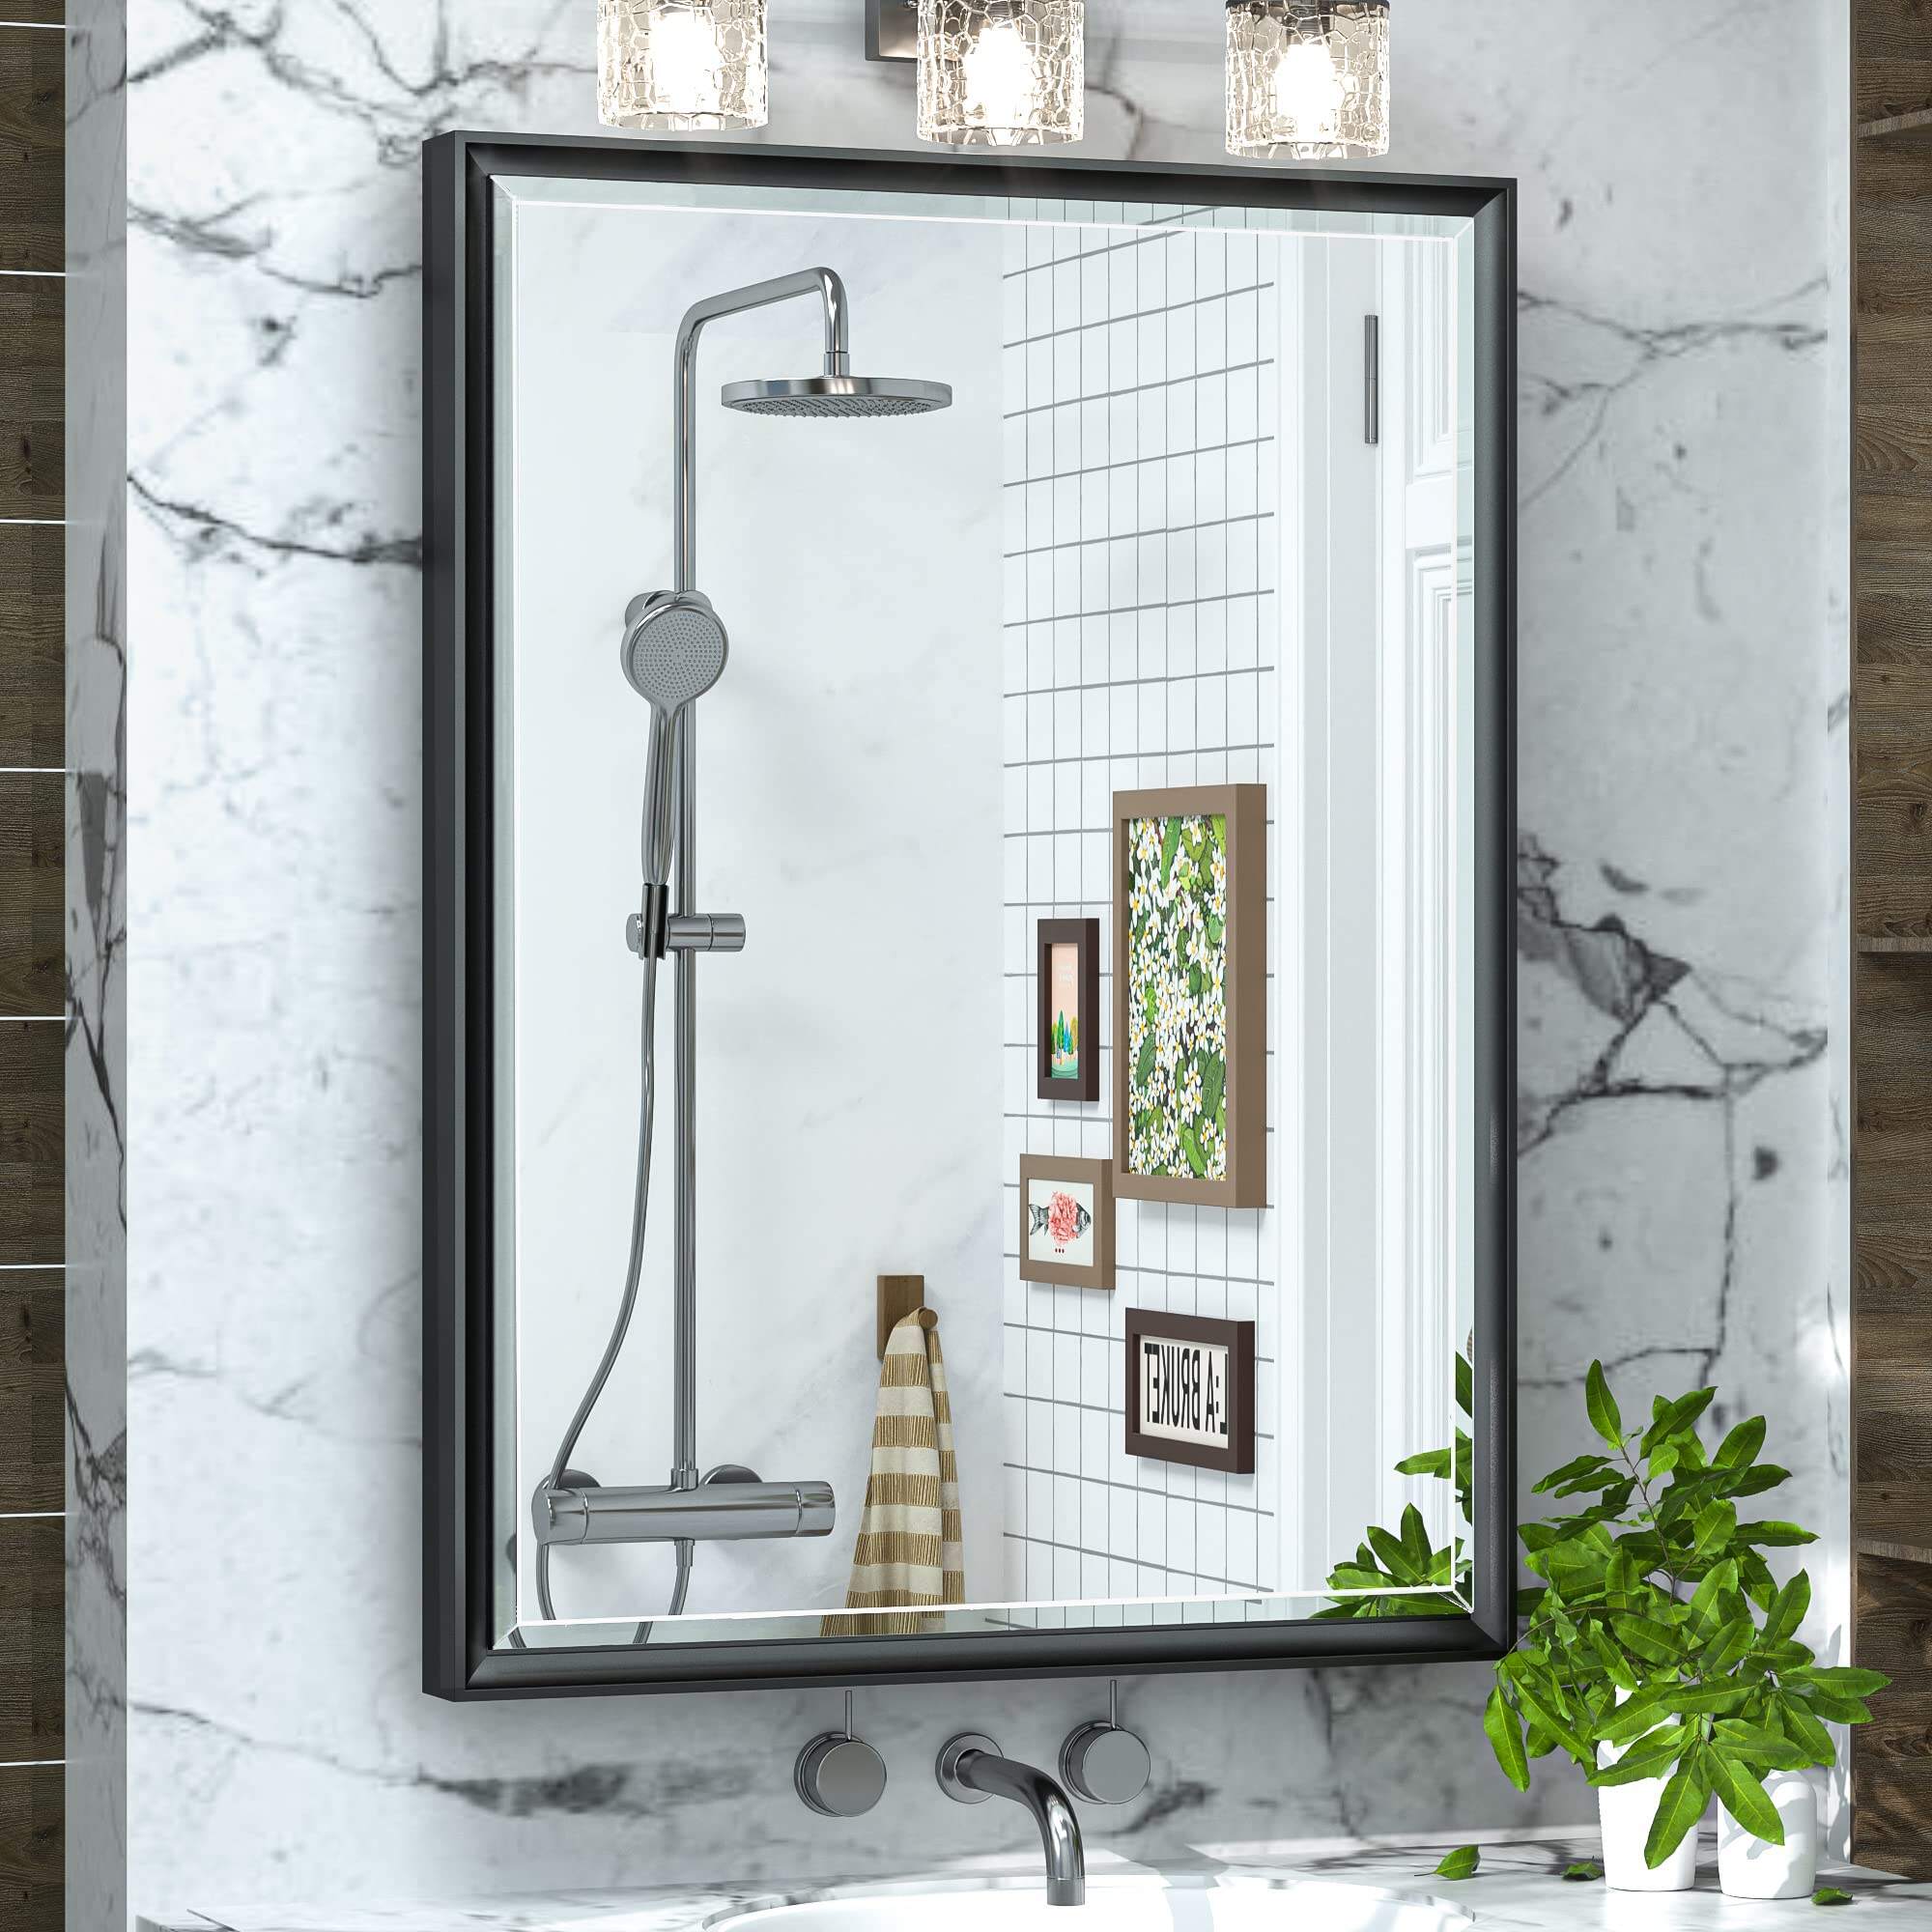 Foshan Haohan Smart Home Co., Ltd.20x26 Recessed Medicine Cabinet Bathroom Vanity Mirror Black Metal Framed Surface Wall Mounted with Aluminum Alloy Beveled Edges Design 1 Door for Modern Farmhouse